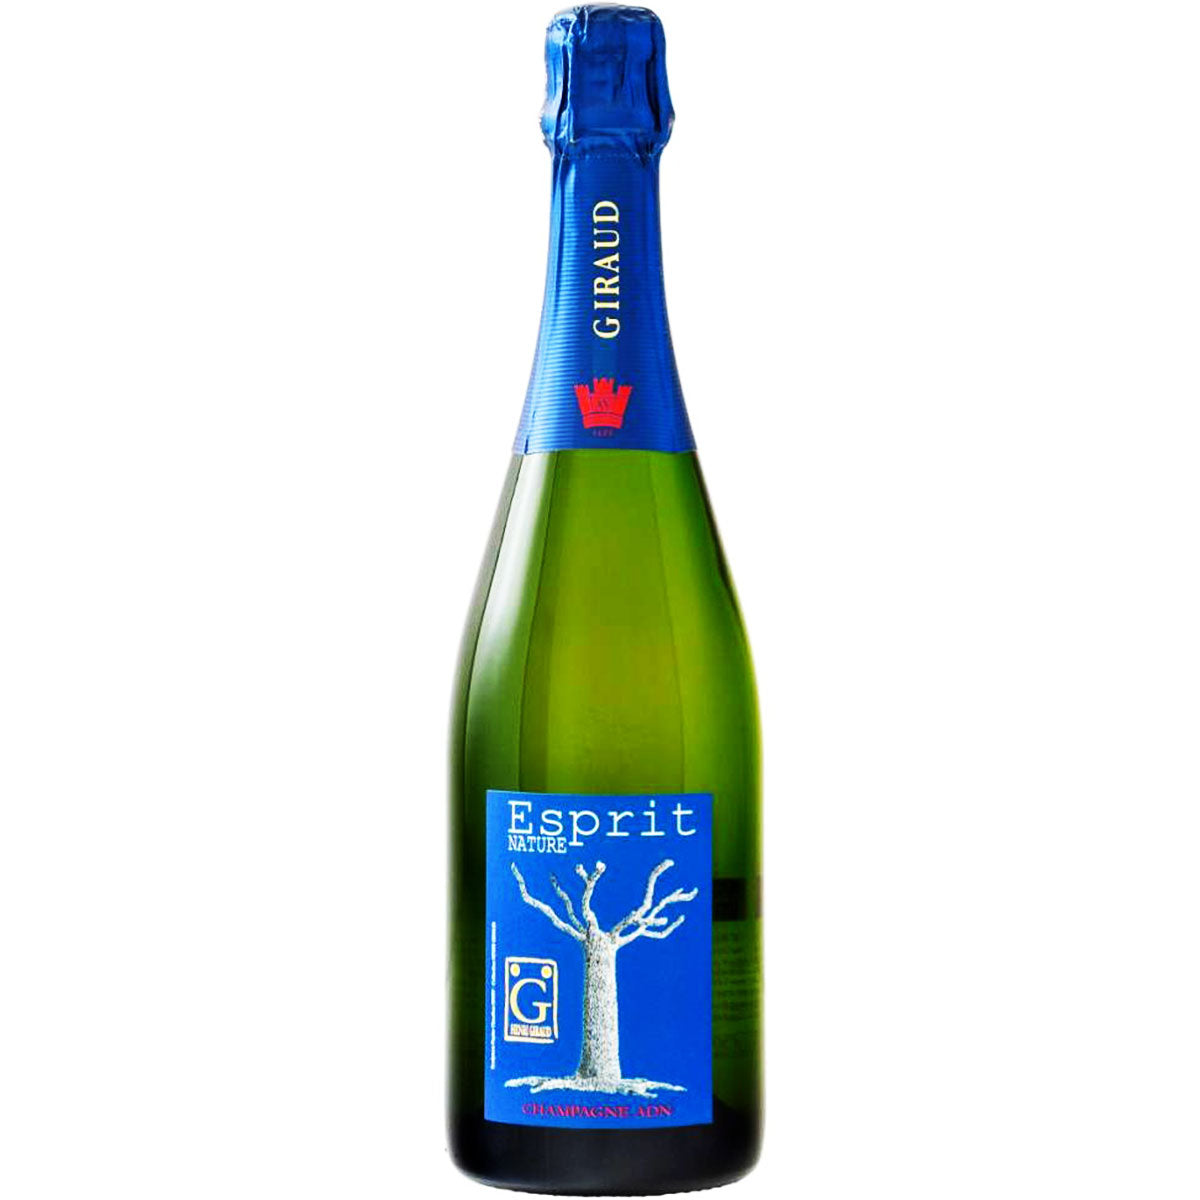 Henri Giraud Esprit Nature Brut Champagne NV